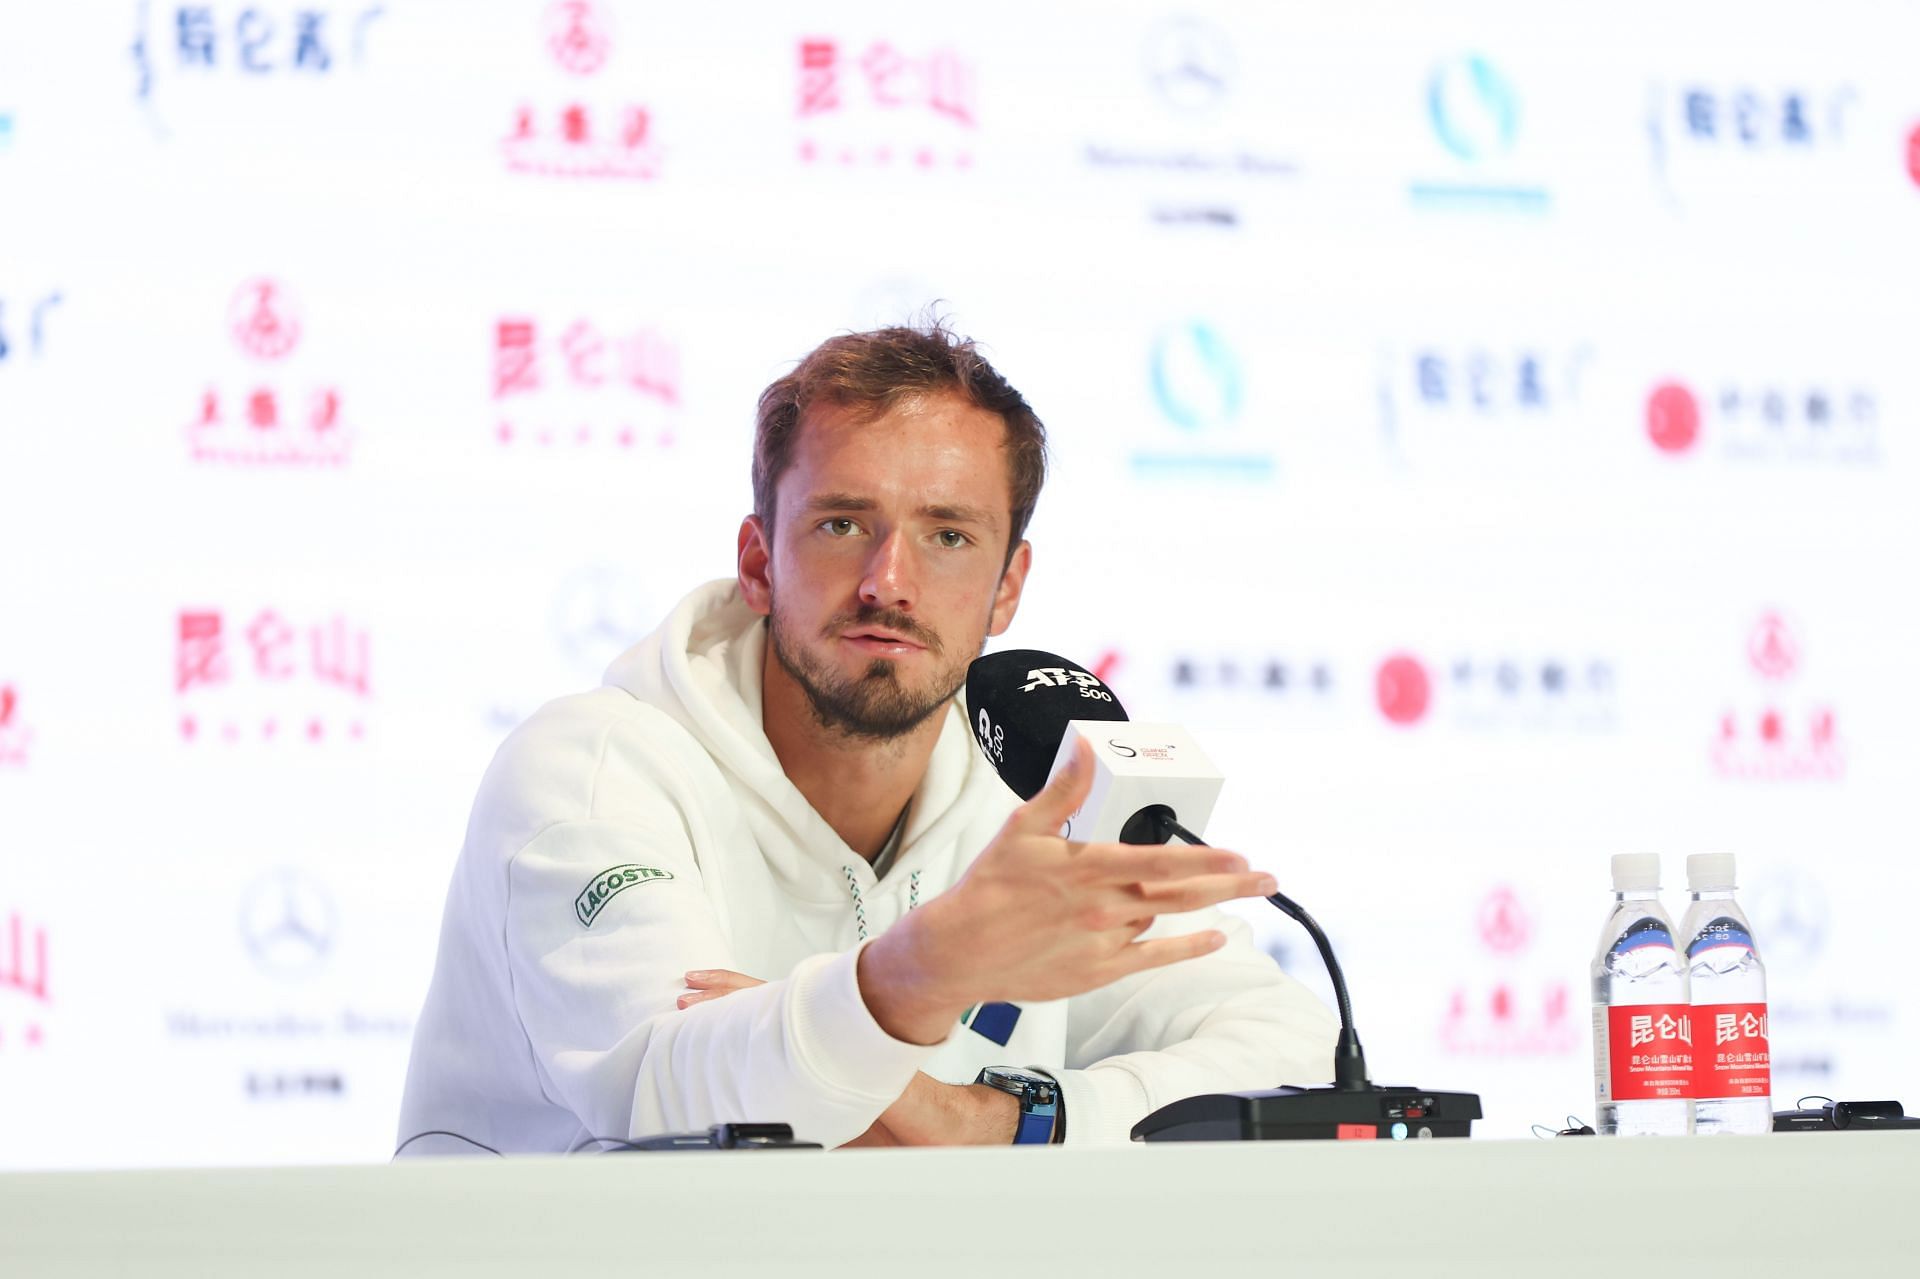 Daniil Medvedev raised concern over balls used on the ATP Tour